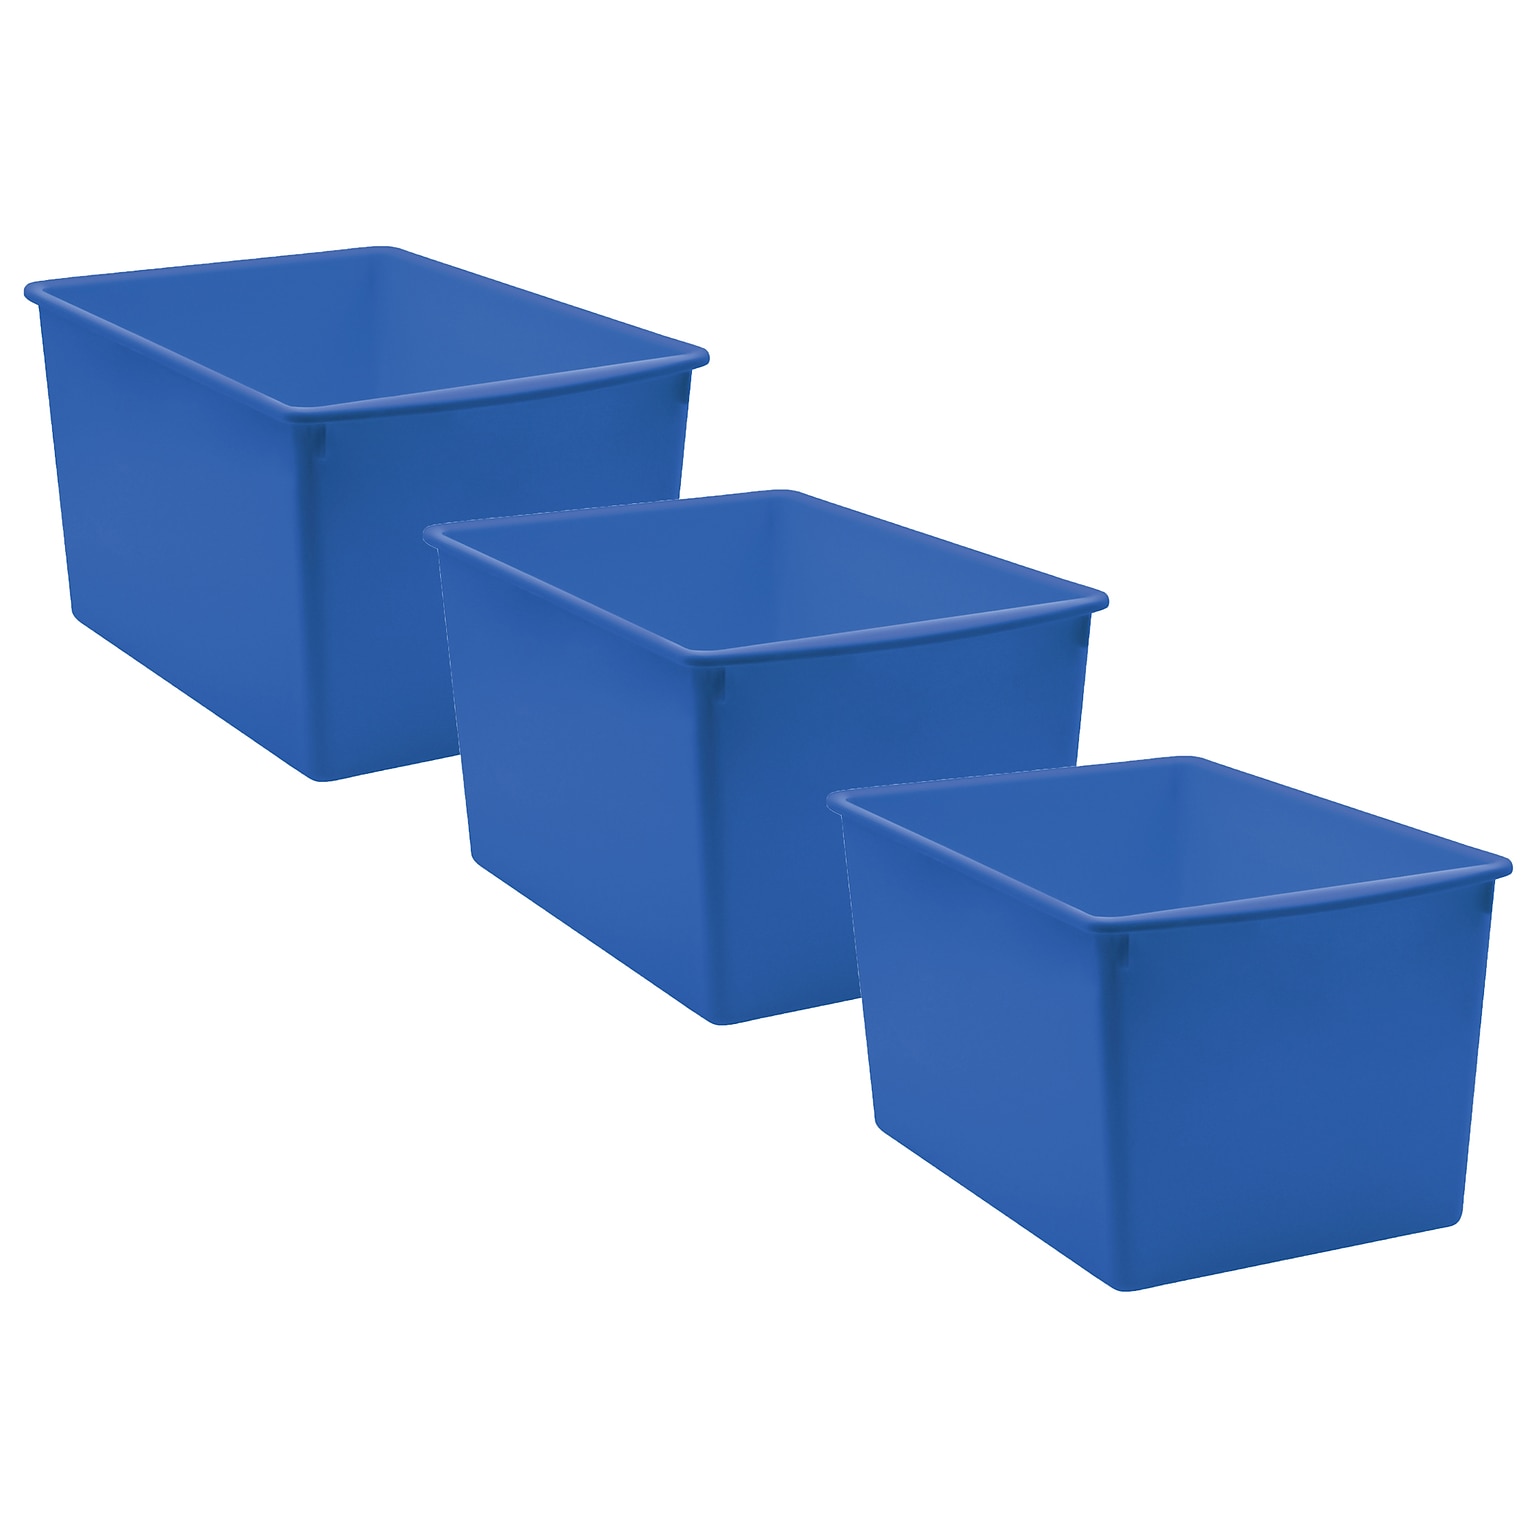 Teacher Created Resources® Plastic Multi-Purpose Bin, 14 x 9.25 x 7.5, Blue, Pack of 3 (TCR20430-3)